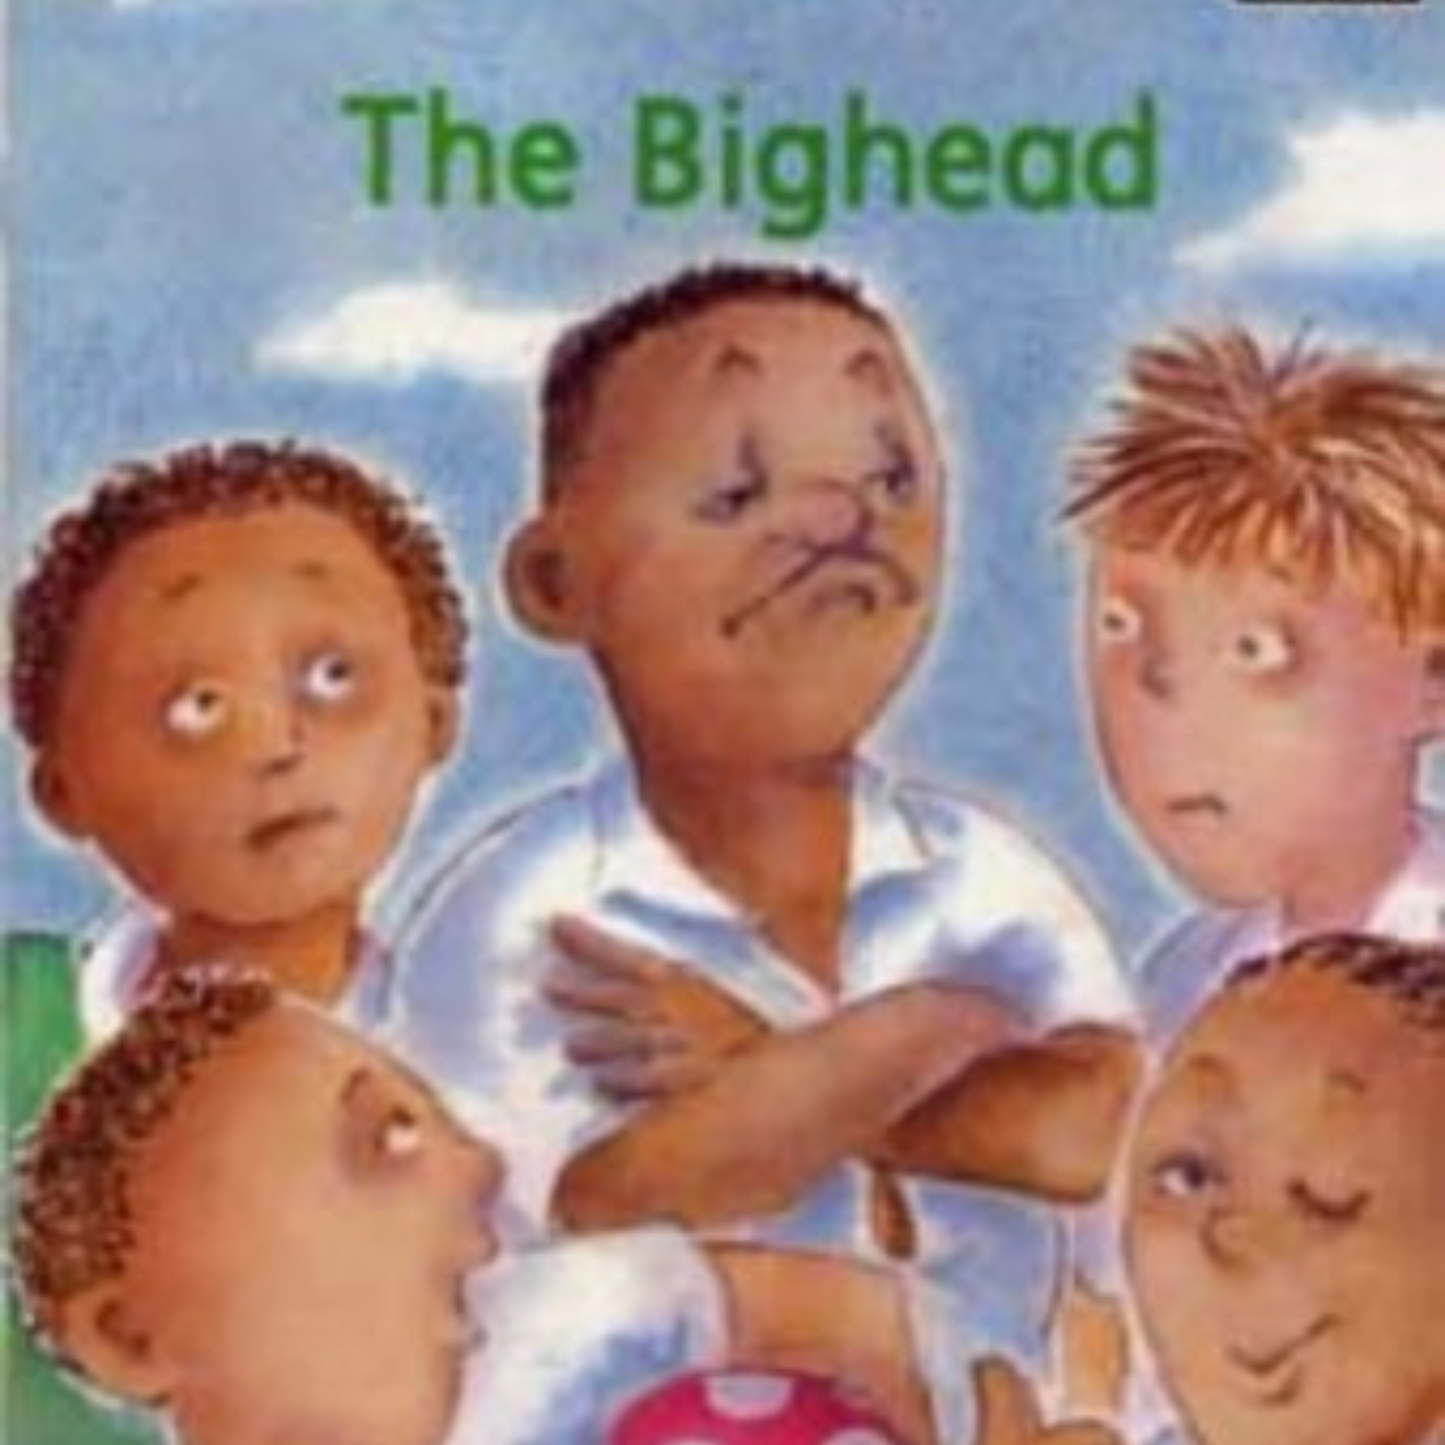 The Big Head